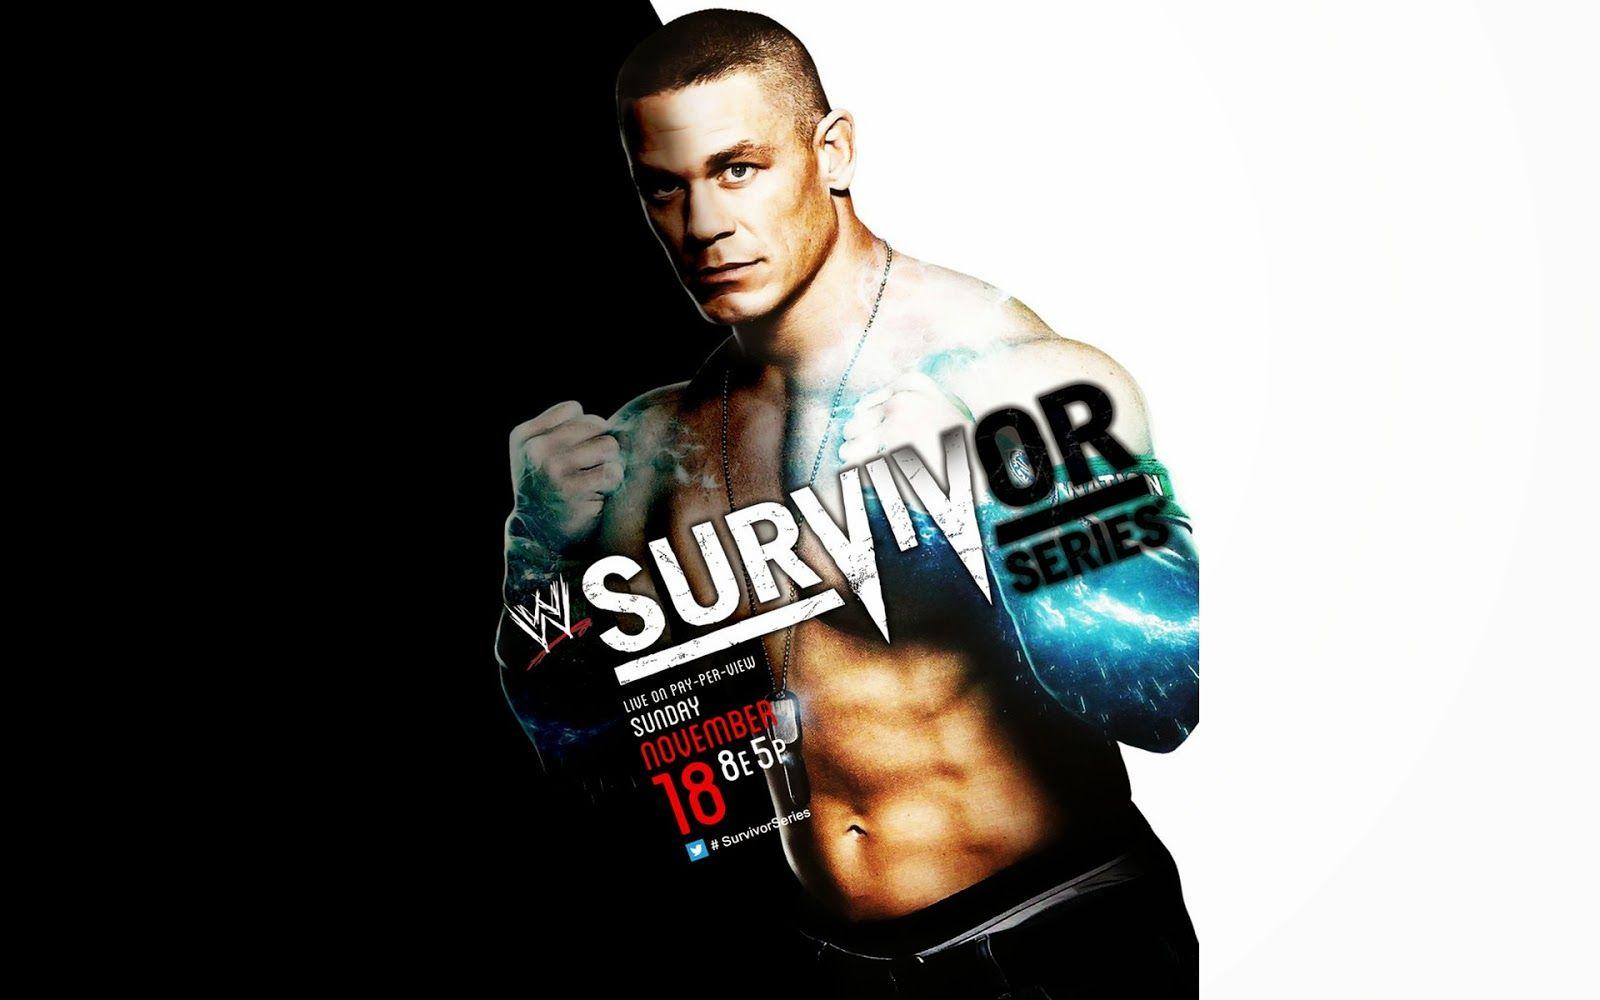 Ravishment: Survivor Series WWE 2013 HD Wallpaper and Widescreen